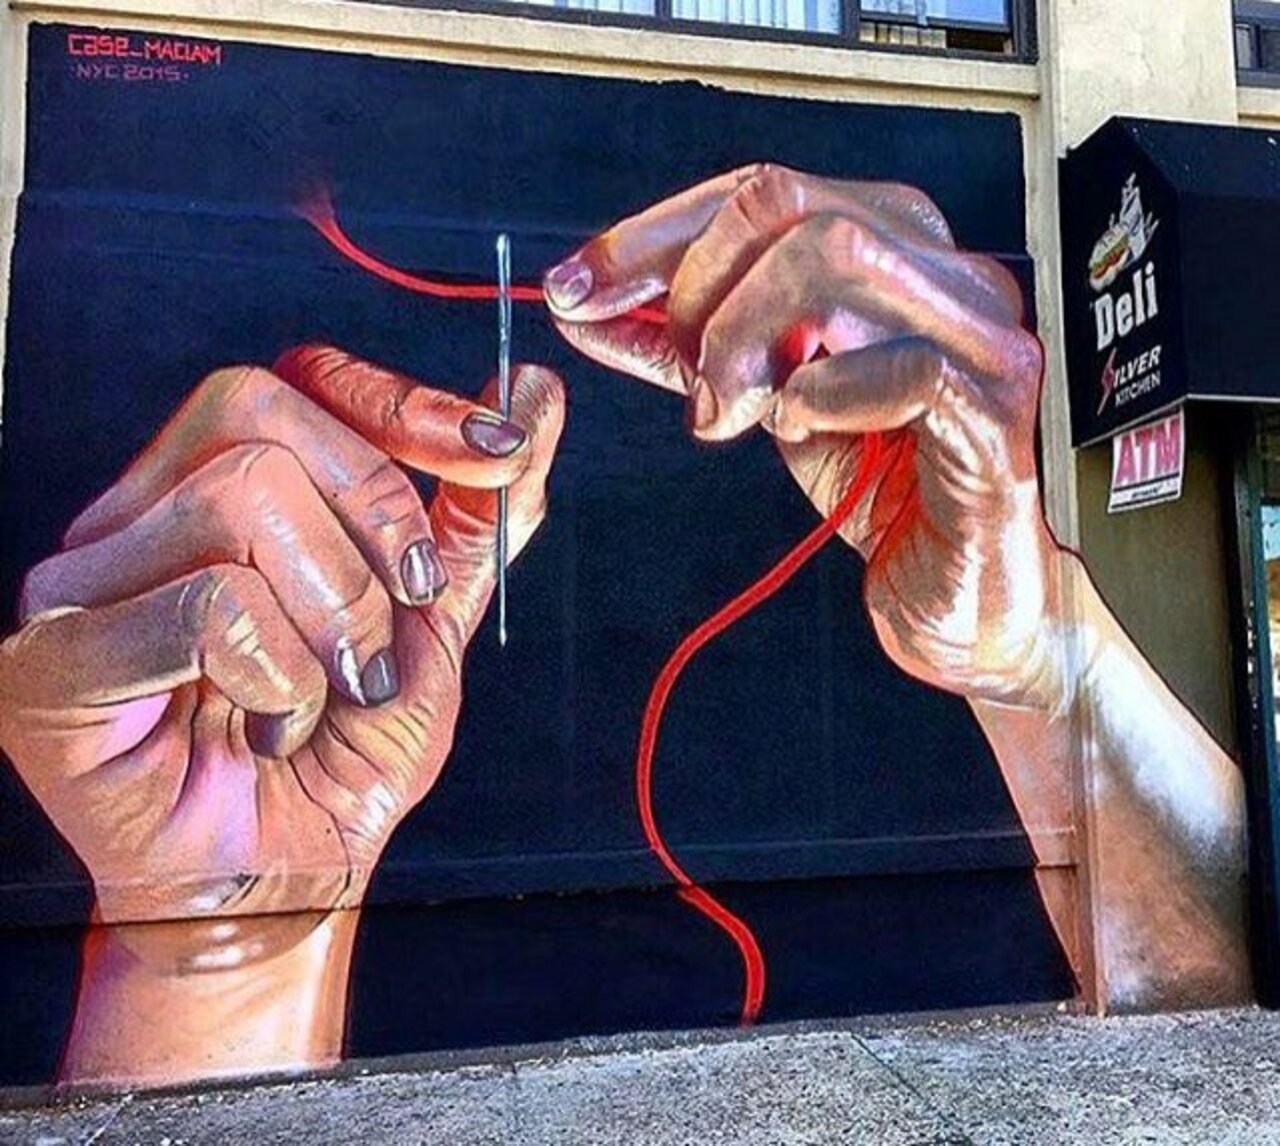 RT @londonjason007: New Street Art by Case Ma'Claim in NYC 

#art #graffiti #mural #streetart https://t.co/rCtwZJz3Zq